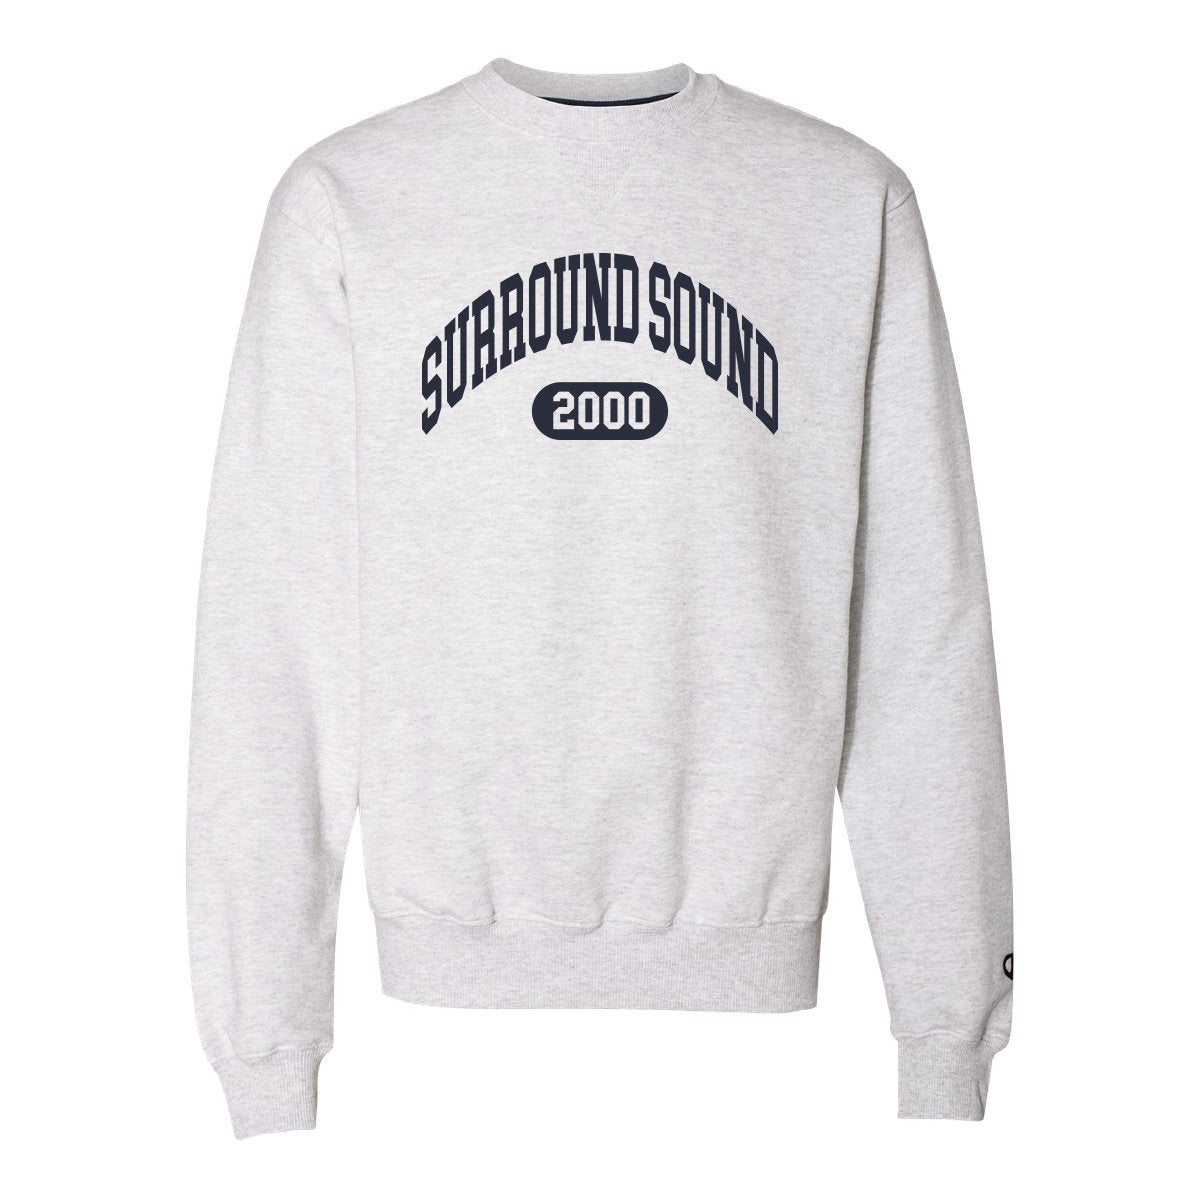 Surround Sound Gray Champion Crewneck Sweatshirt